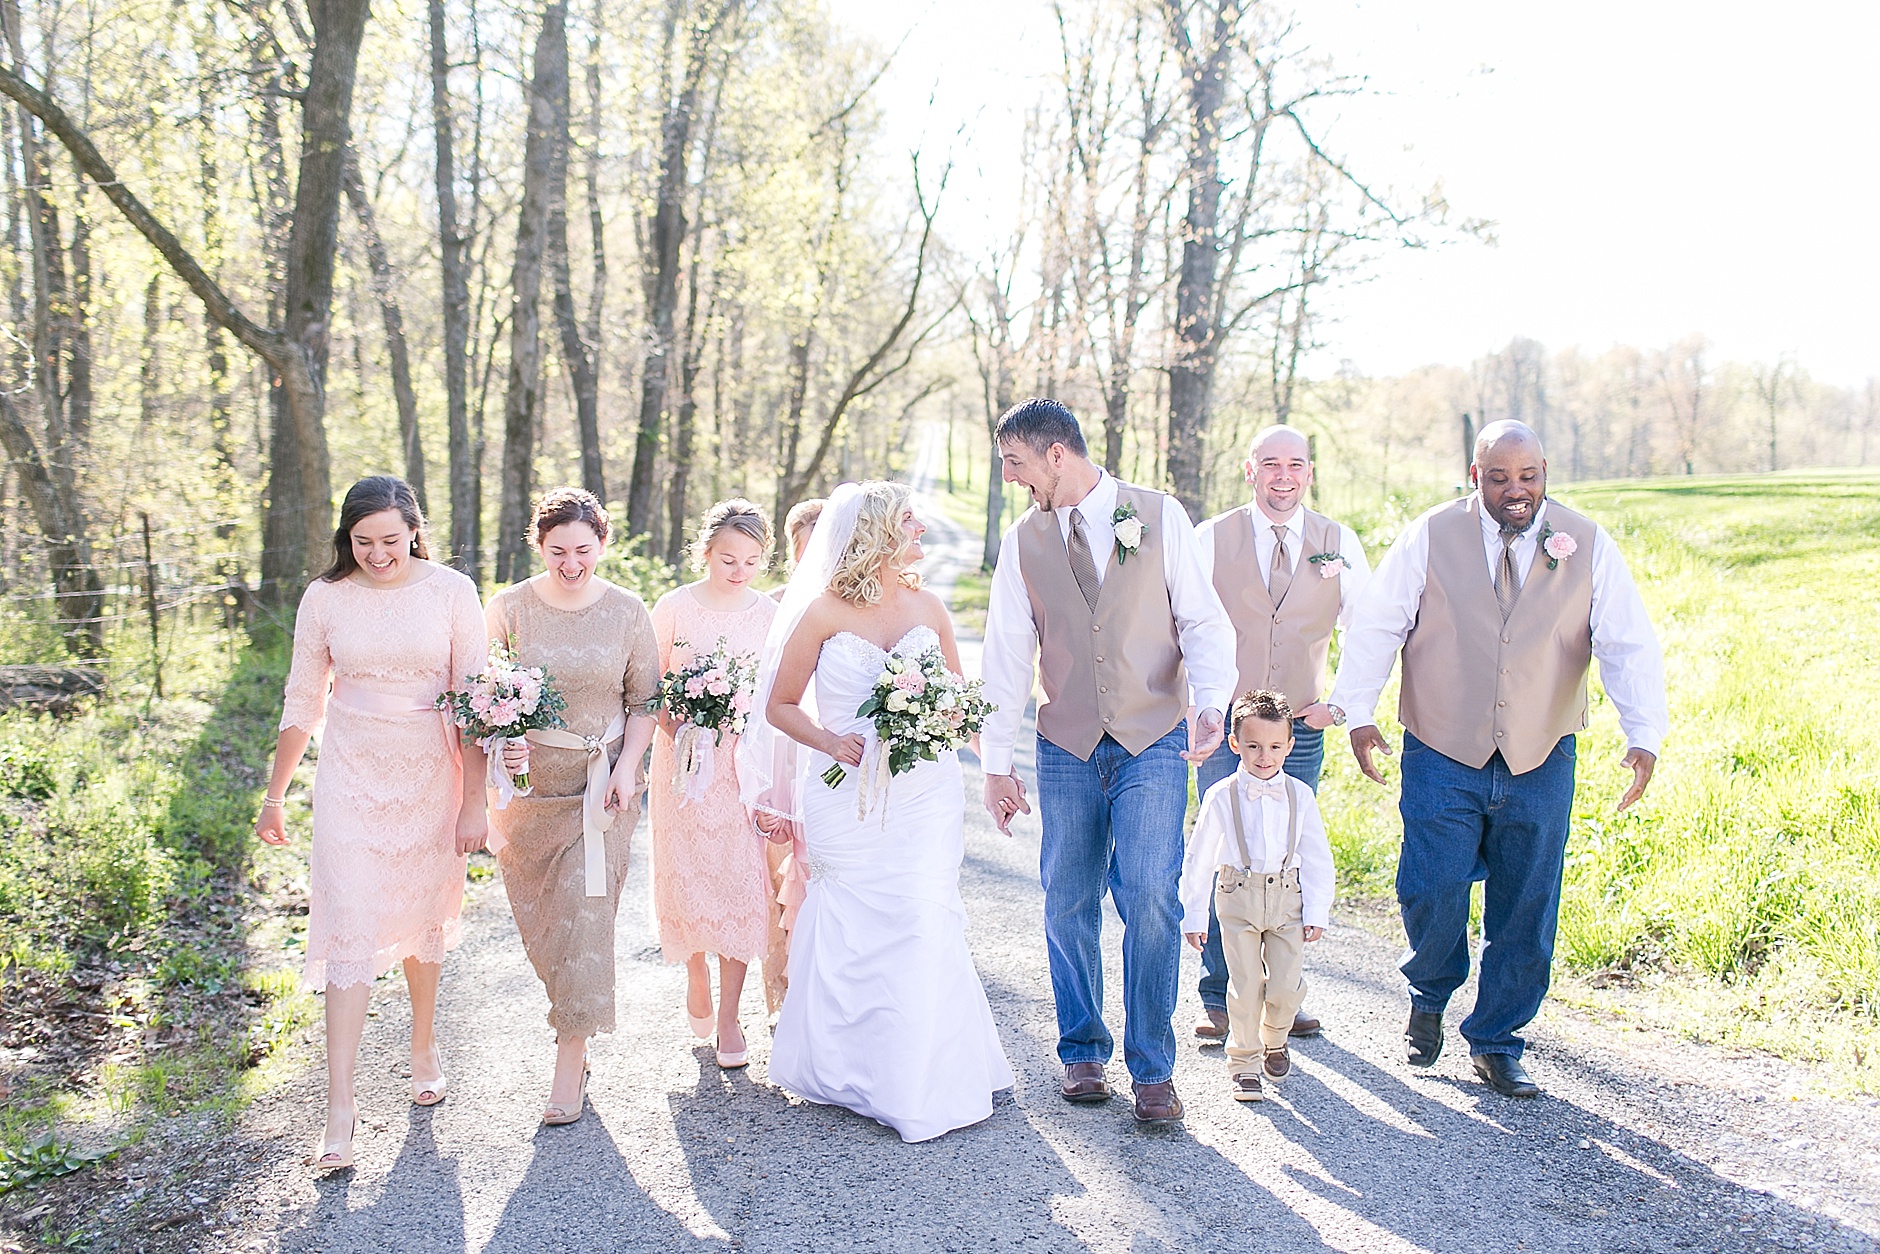 Western Kentucky Spring Farm Wedding by Rachael Houser Photographhy